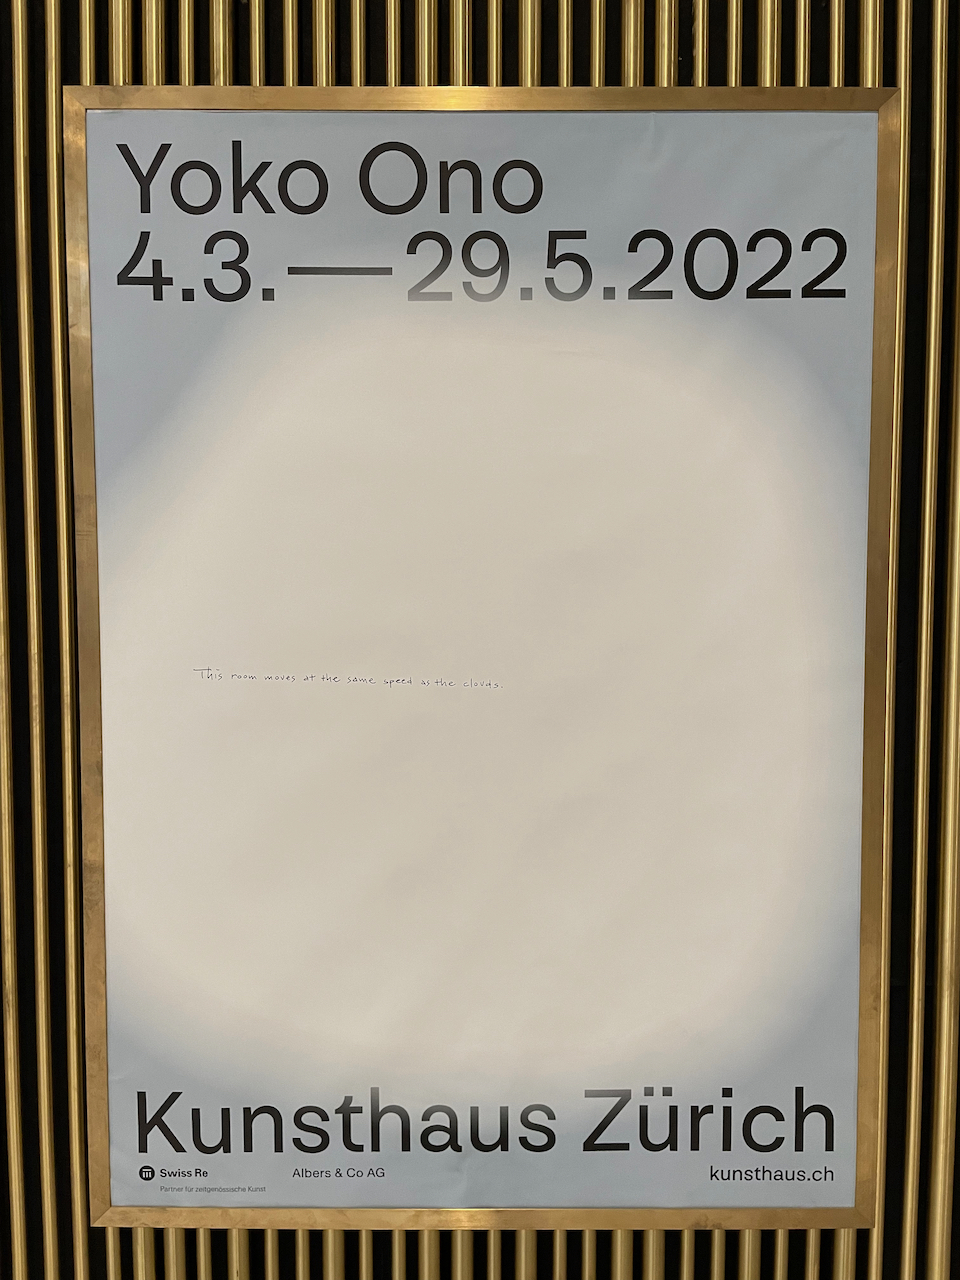 yoko ono daughter 2022